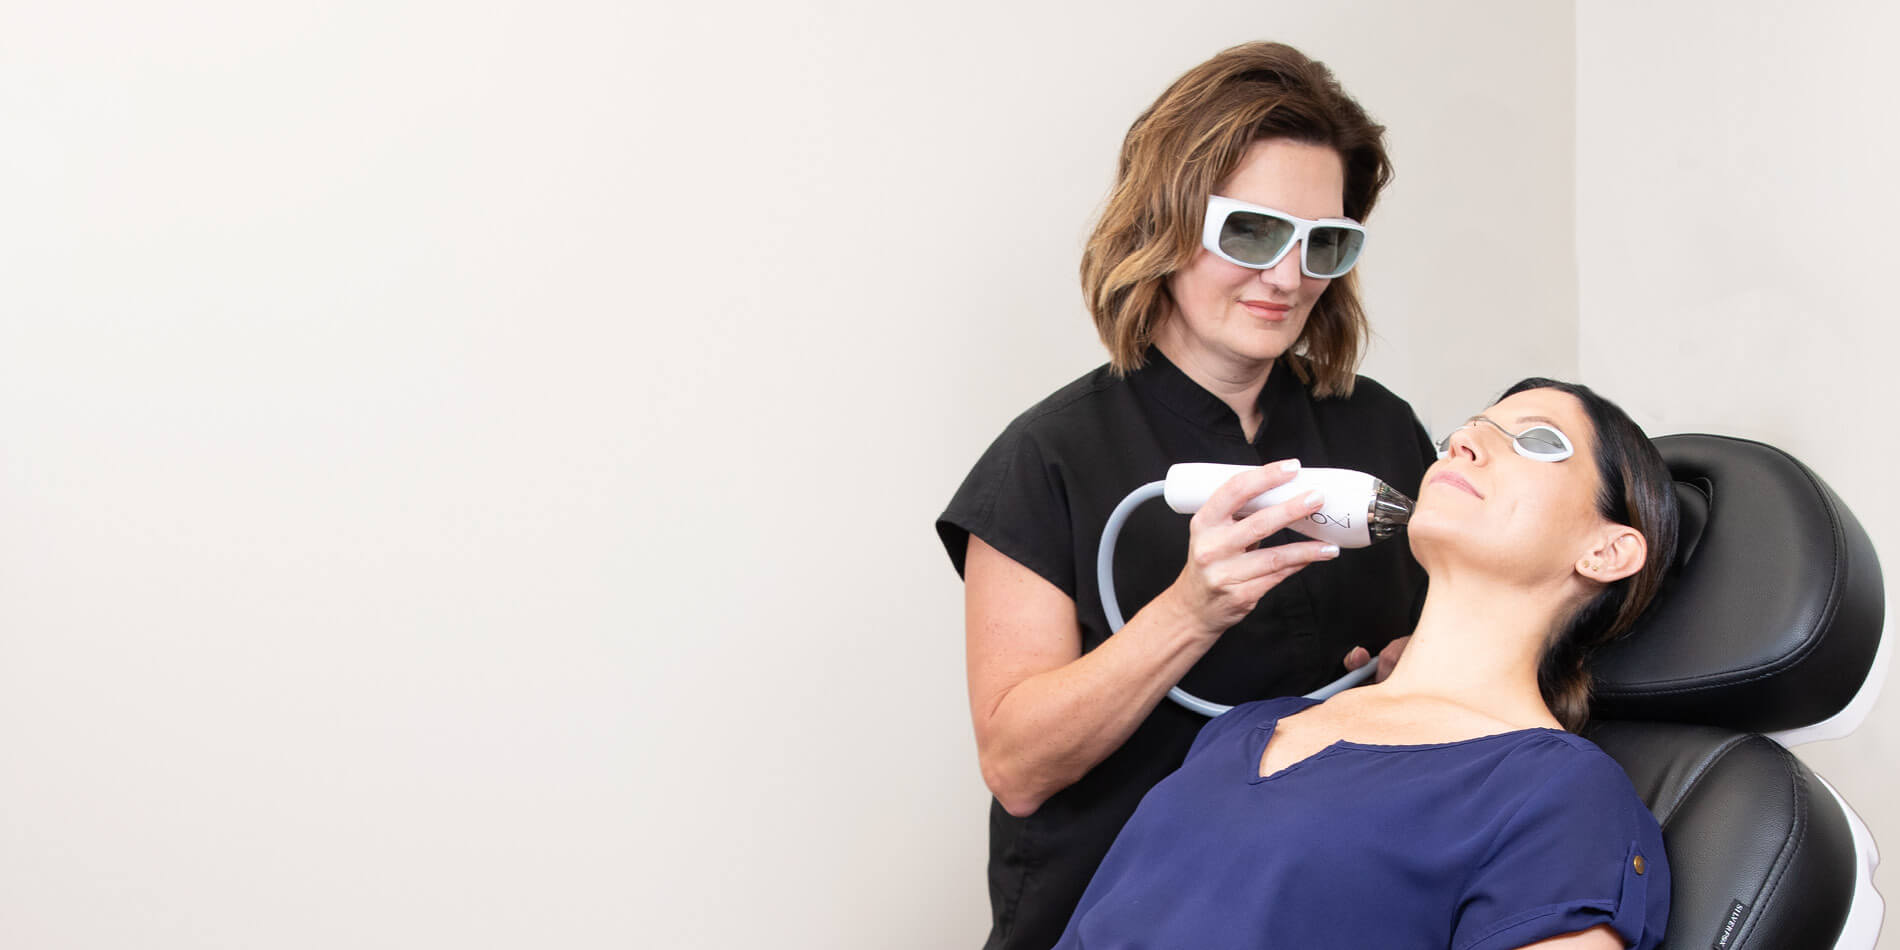 woman receiving laser treatment